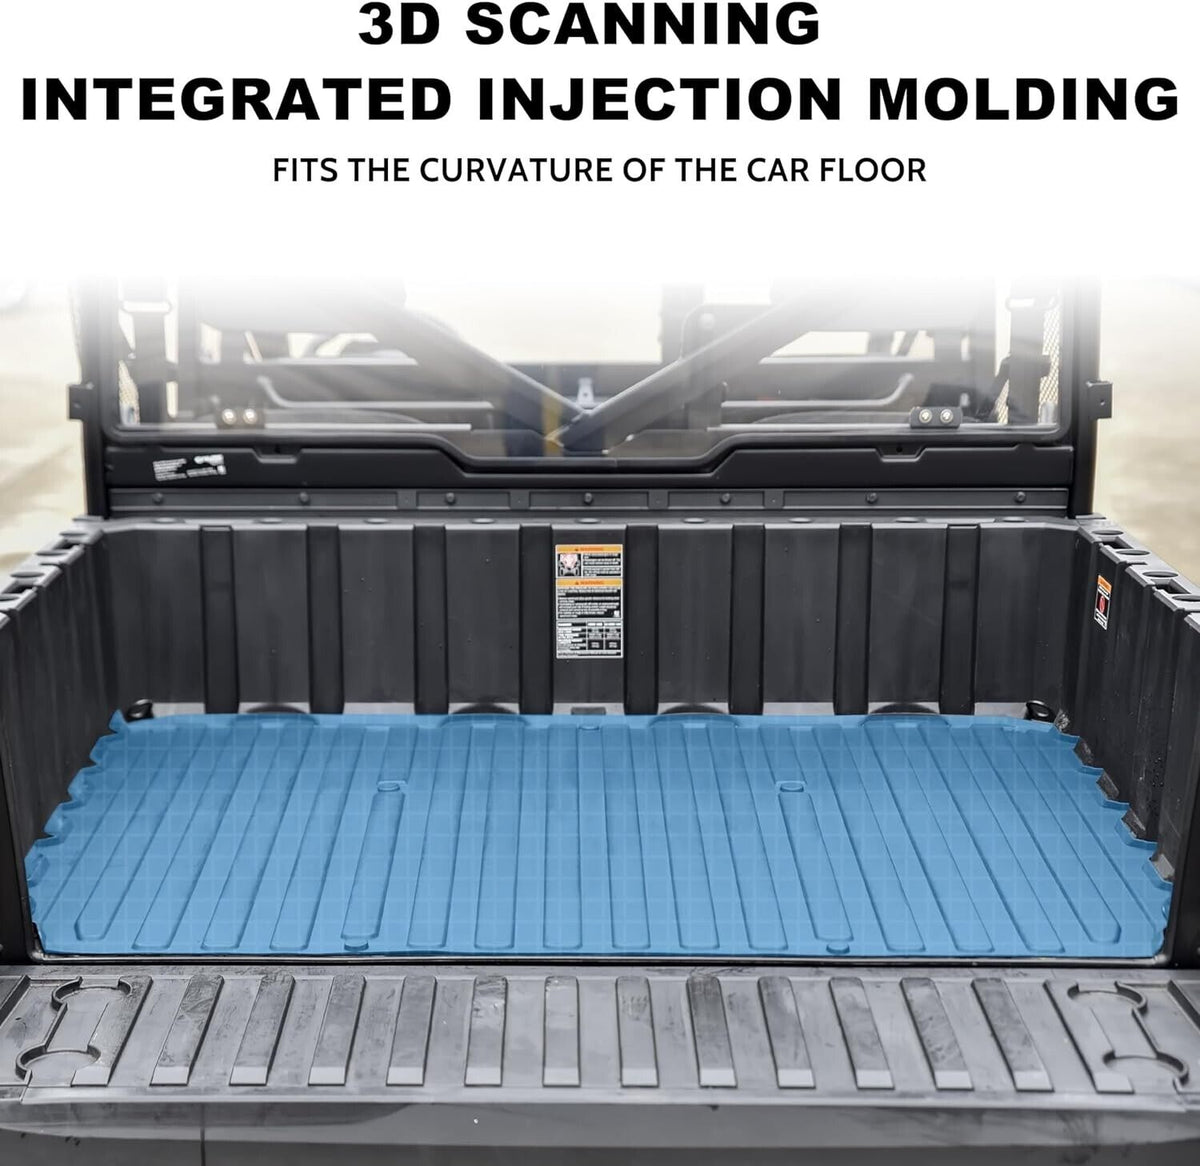 SAUTVS Rubber Bed Mat Liner for Polaris Ranger XP 1000, TPE Rear Cargo Bed Mat